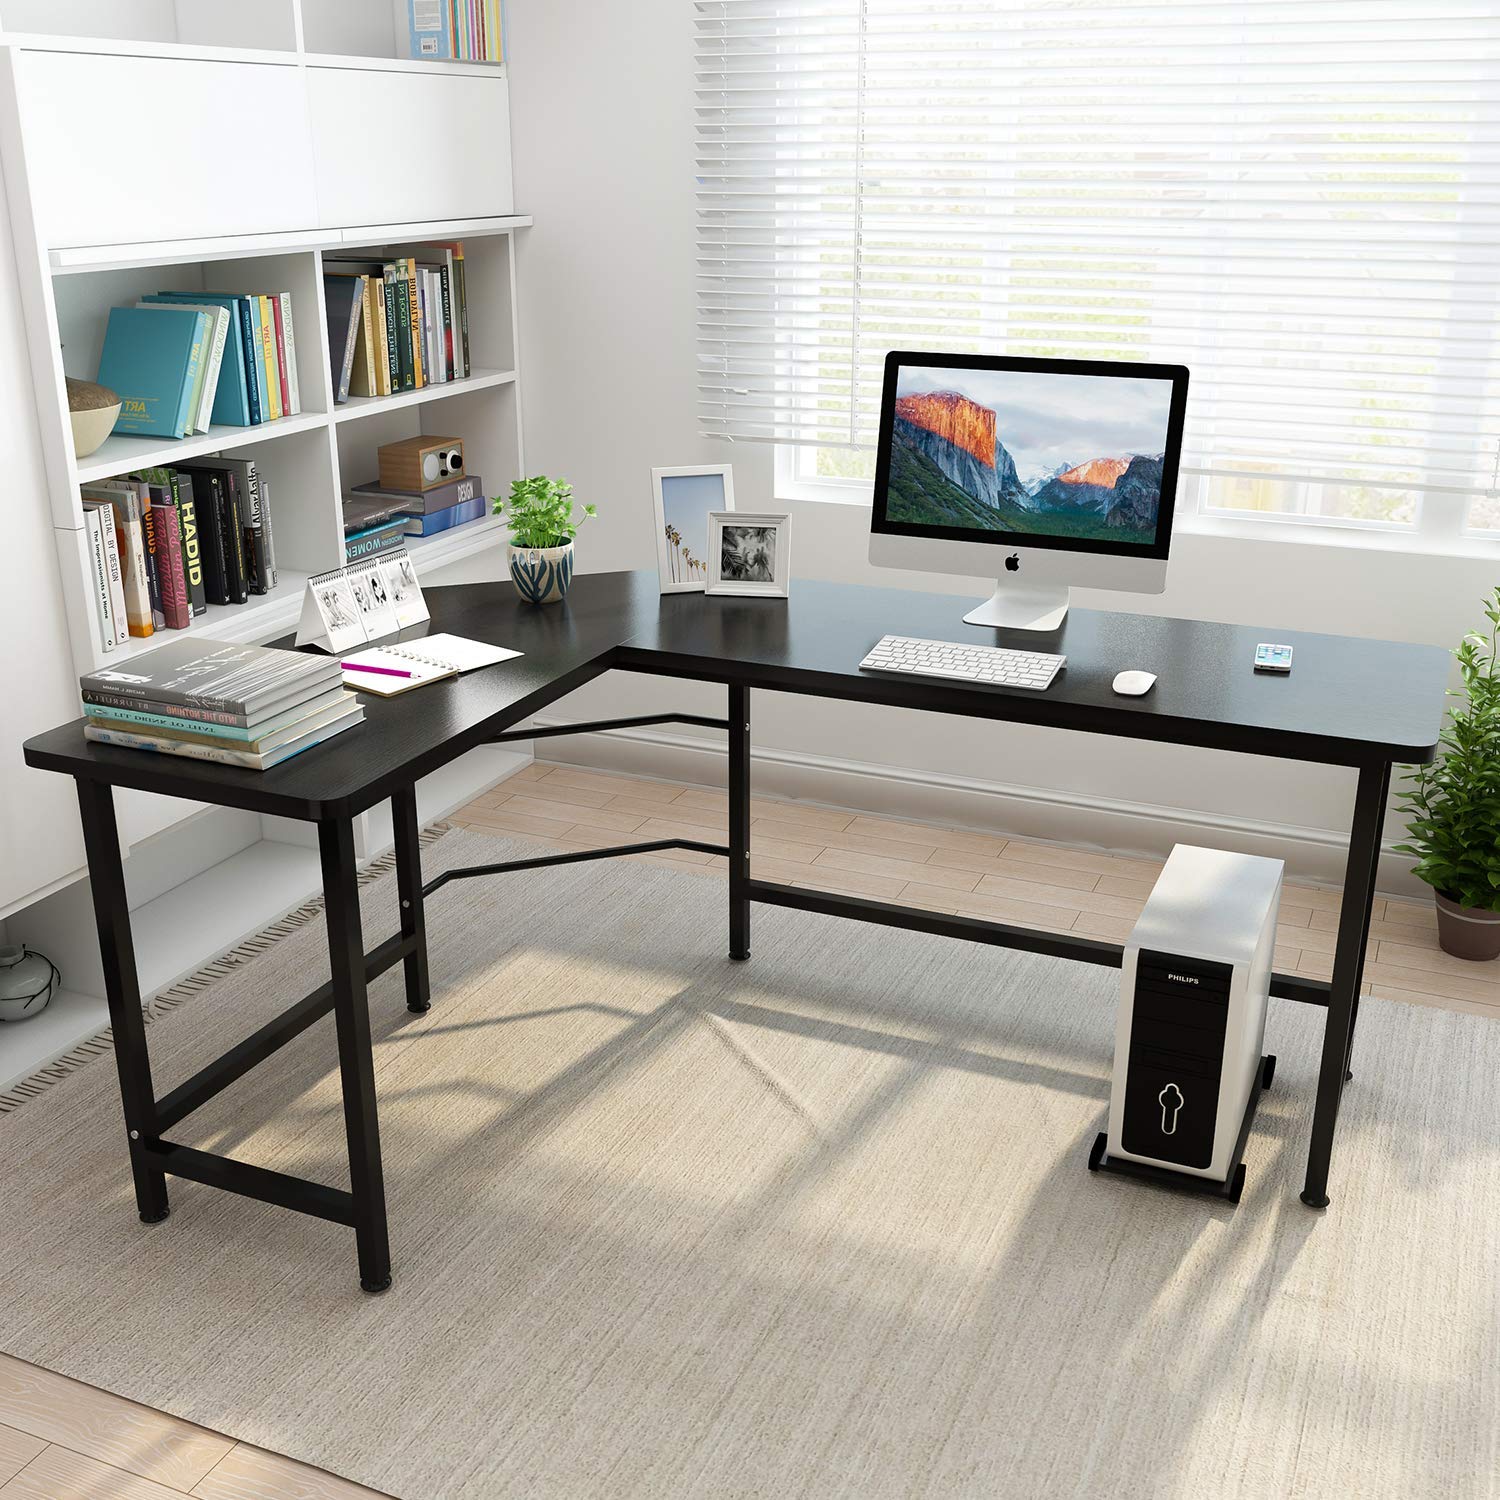 Ktaxon L-Shaped Computer Desk Corner PC Latop Table Study Office Workstation Black - image 1 of 11